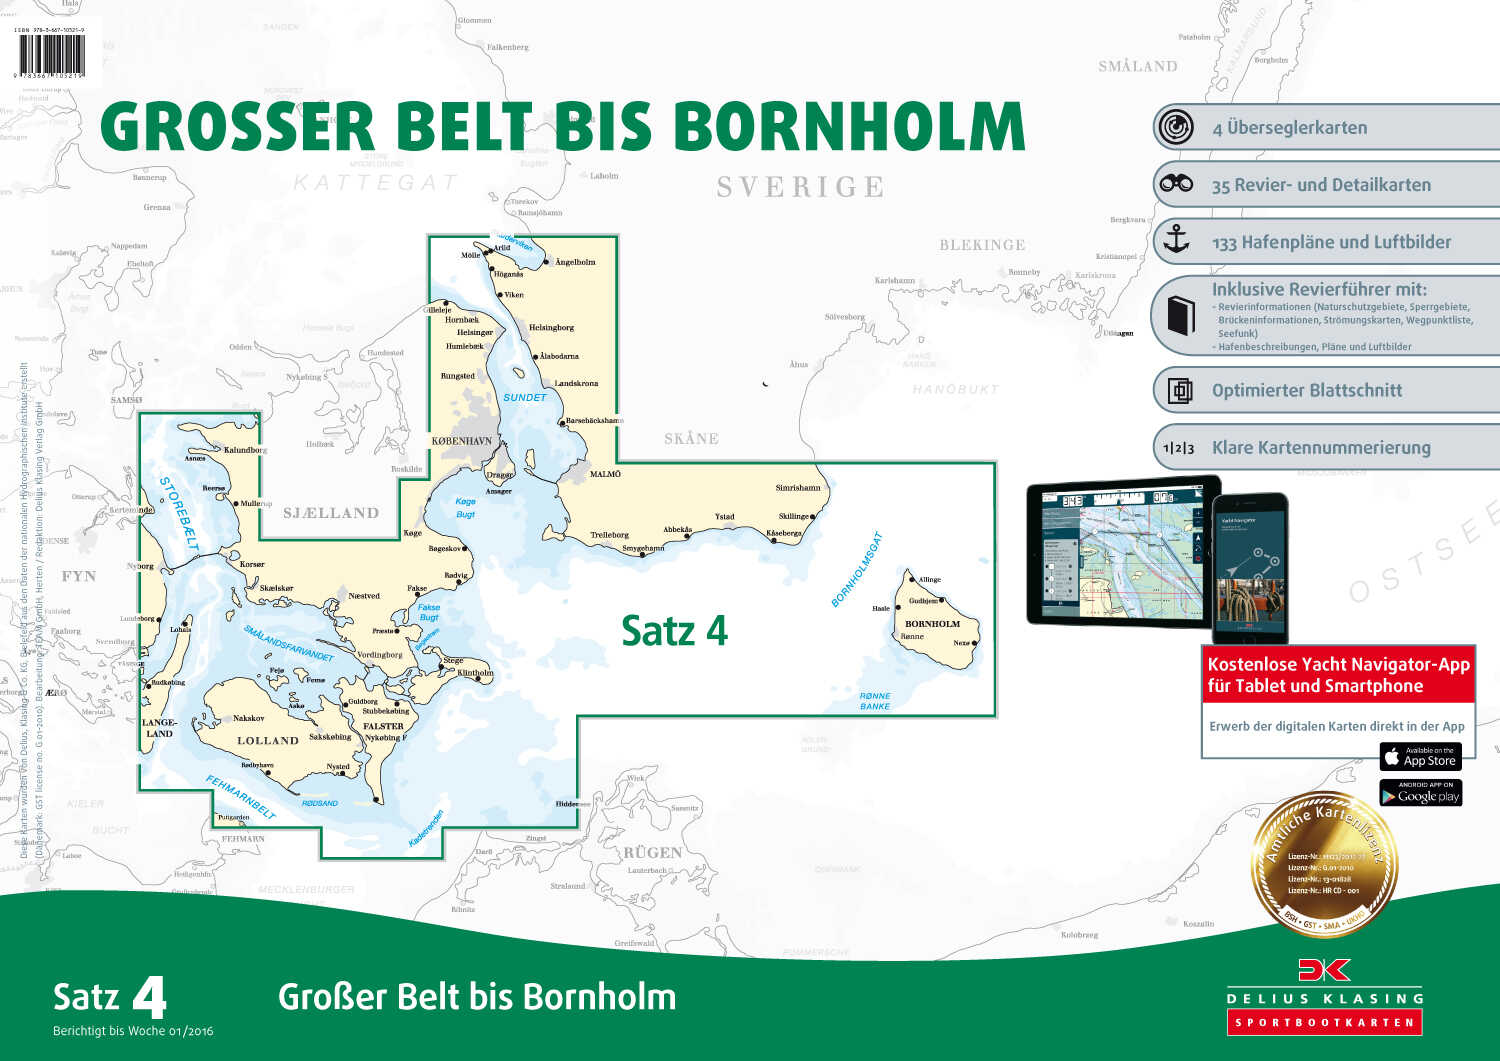 Delius Klasing Sportbootkarten Satz 4: Großer Belt bis Bornholm